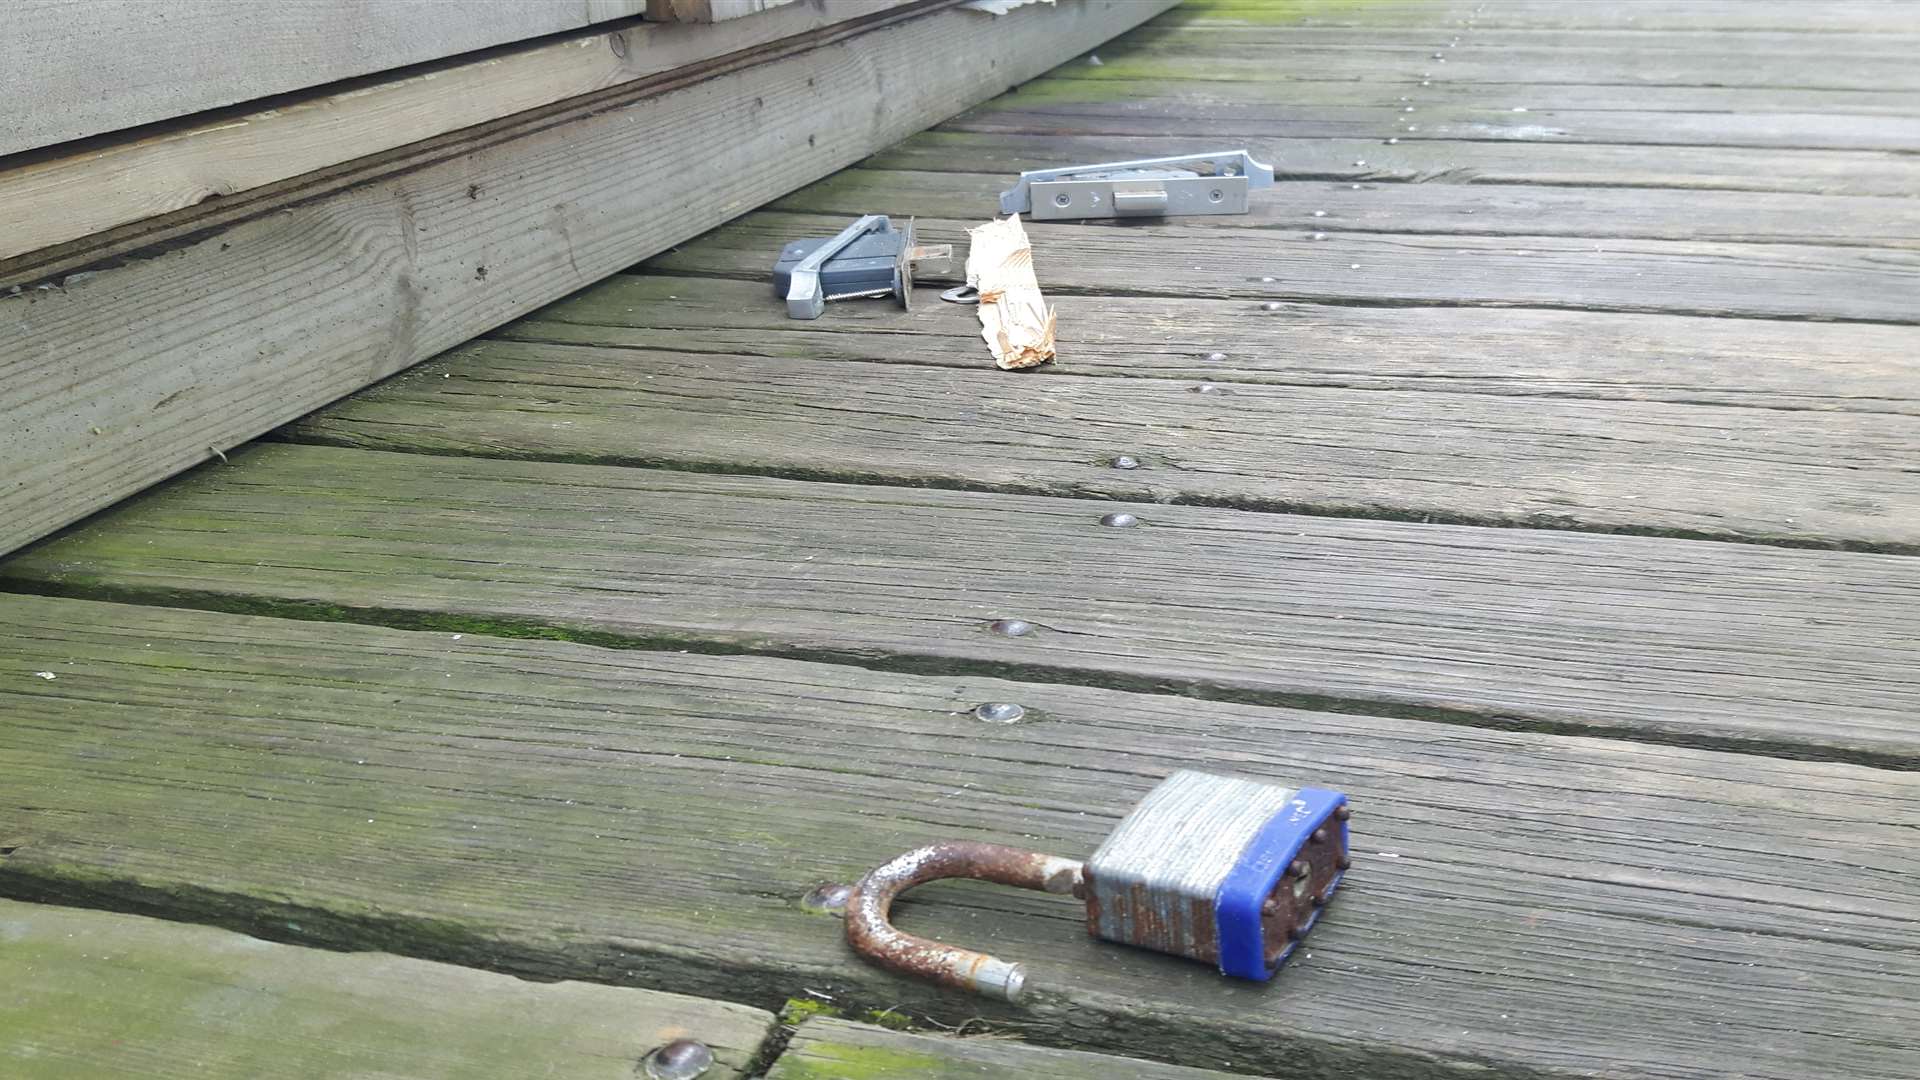 Padlocks were broken on the pier